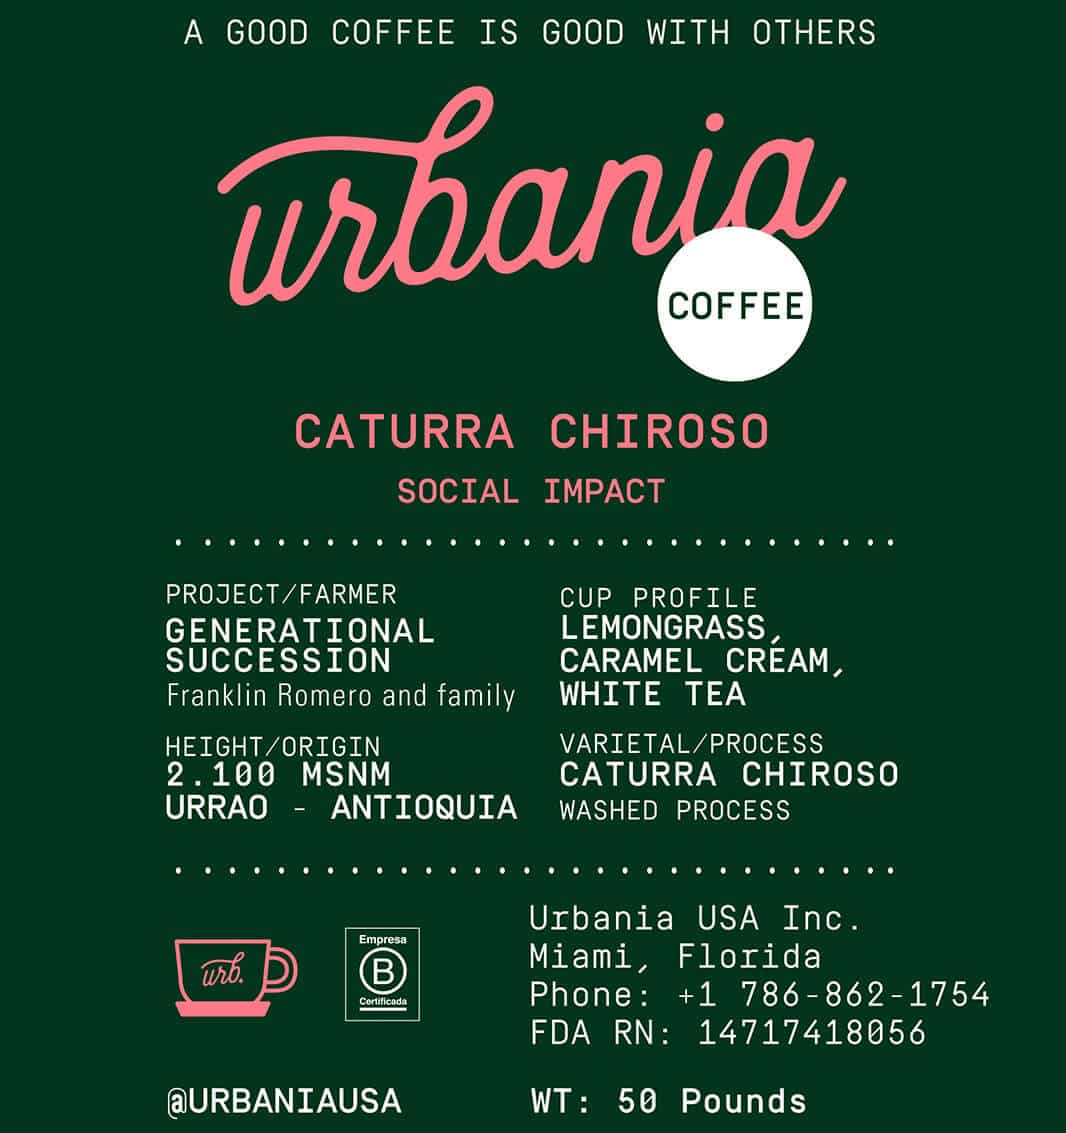 caturra-chiroso-impact-caf‚-urbania-colombia